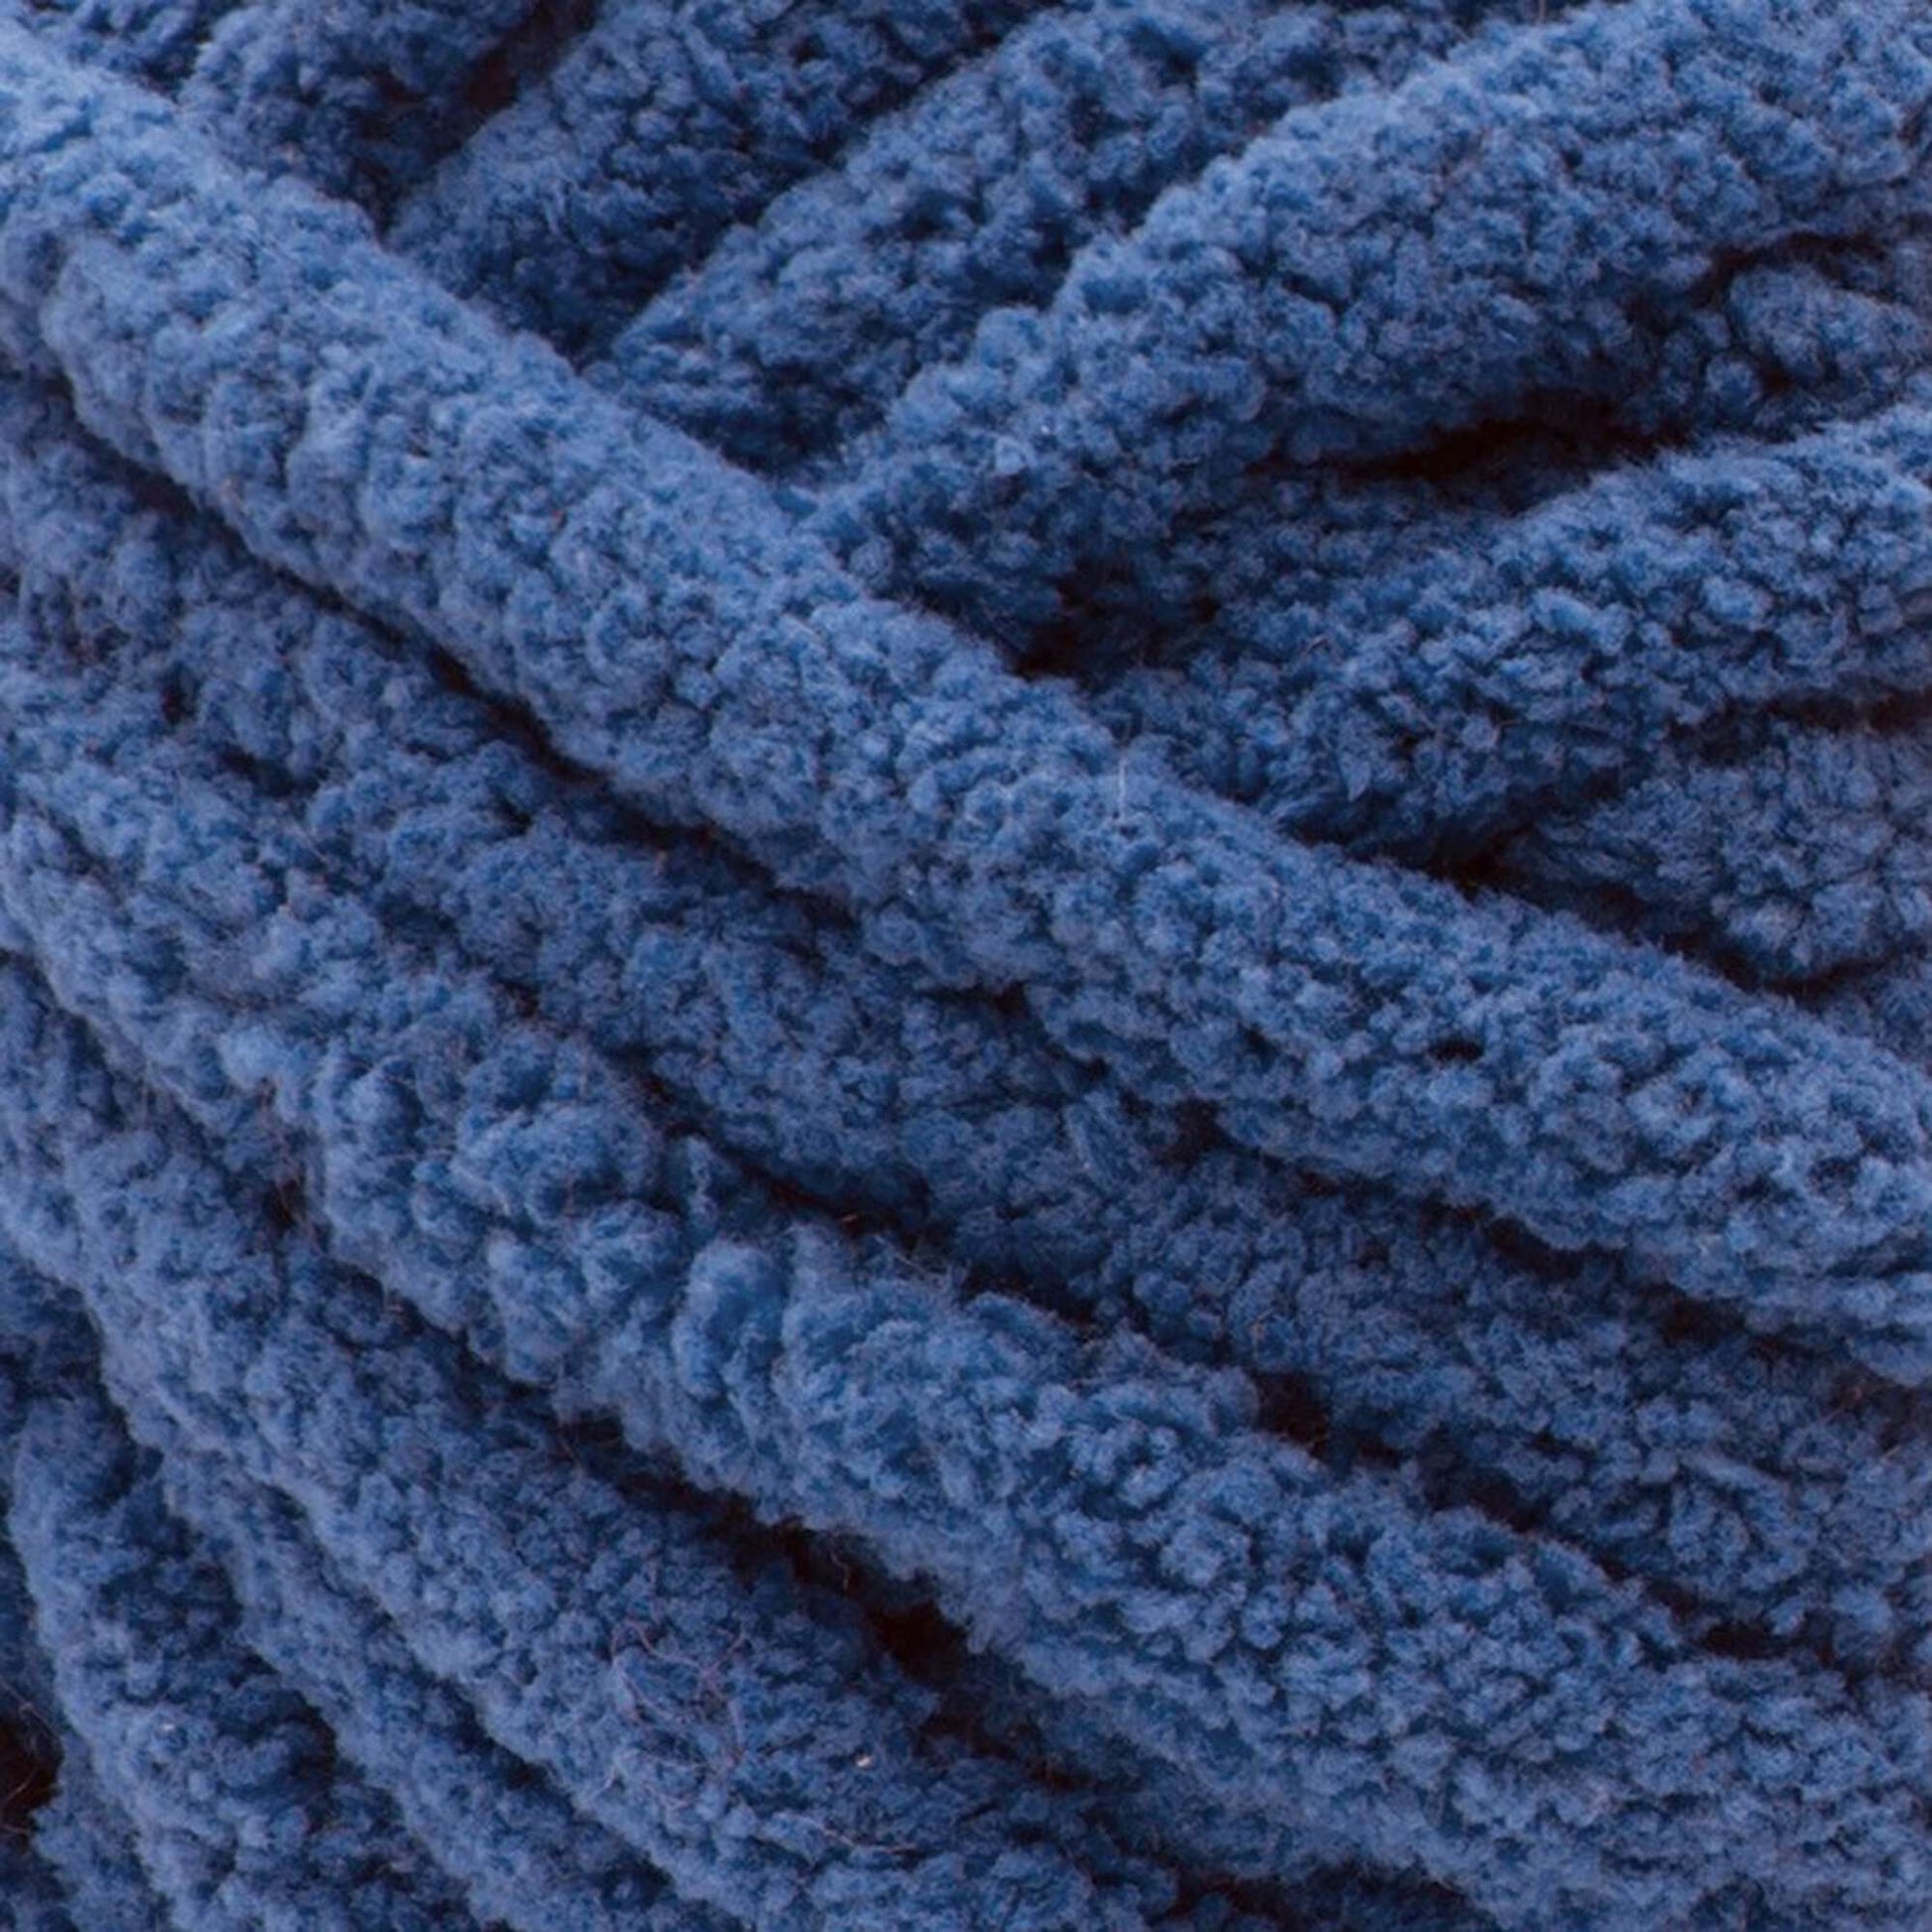 Bernat Blanket Extra Yarn (300g/10.5oz) - Clearance Shades* Crisp Blue